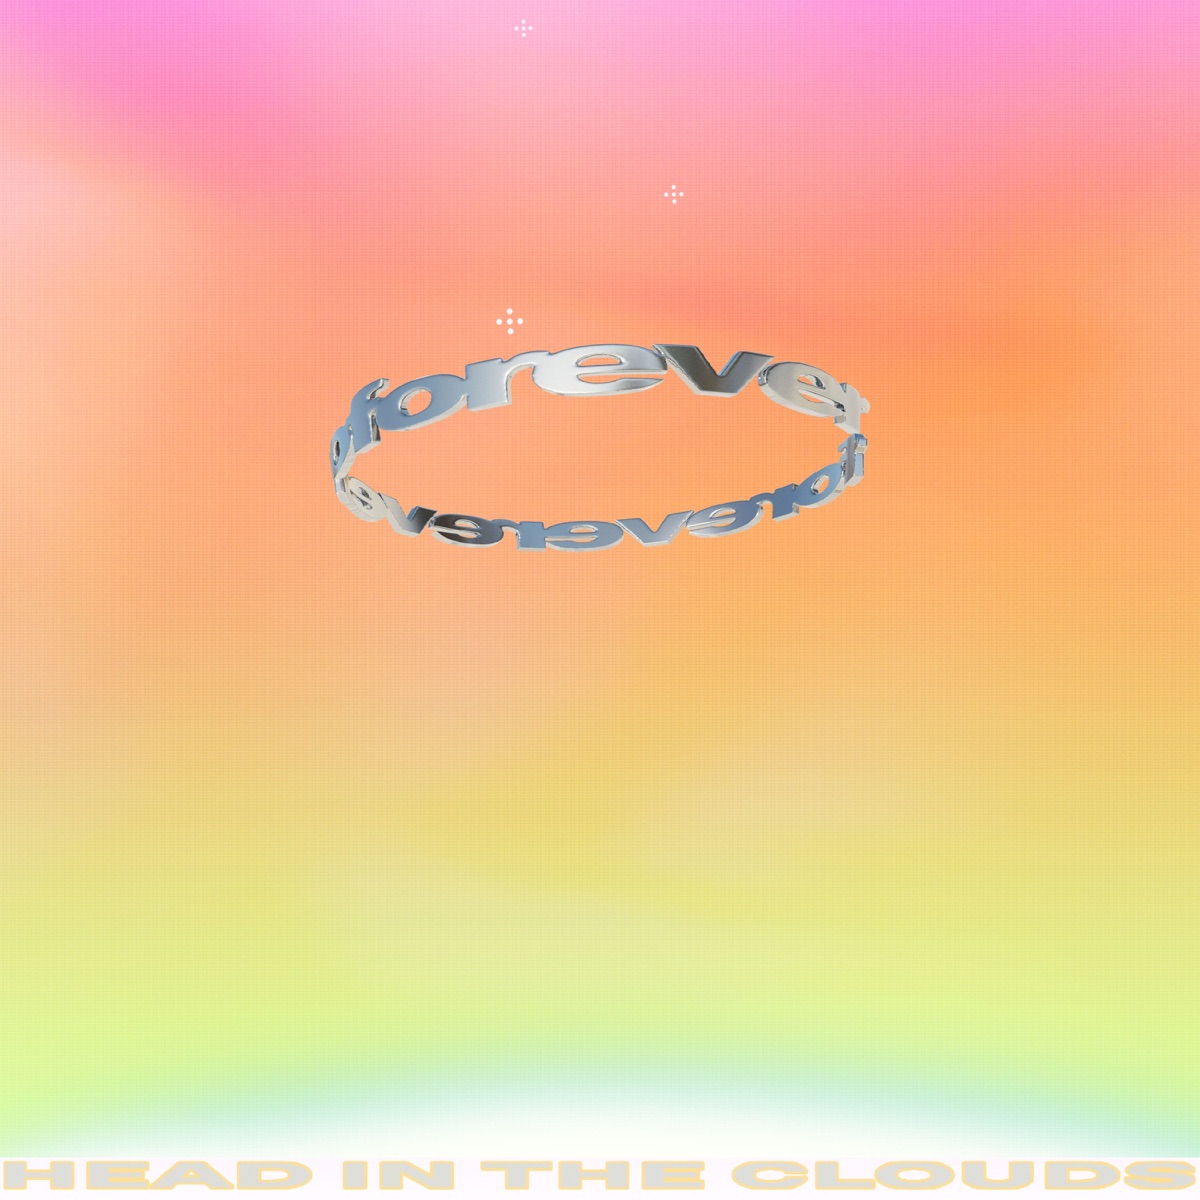 『88rising, HIKARU UTADA, Warren Hue - T』収録の『Head In The Clouds Forever』ジャケット